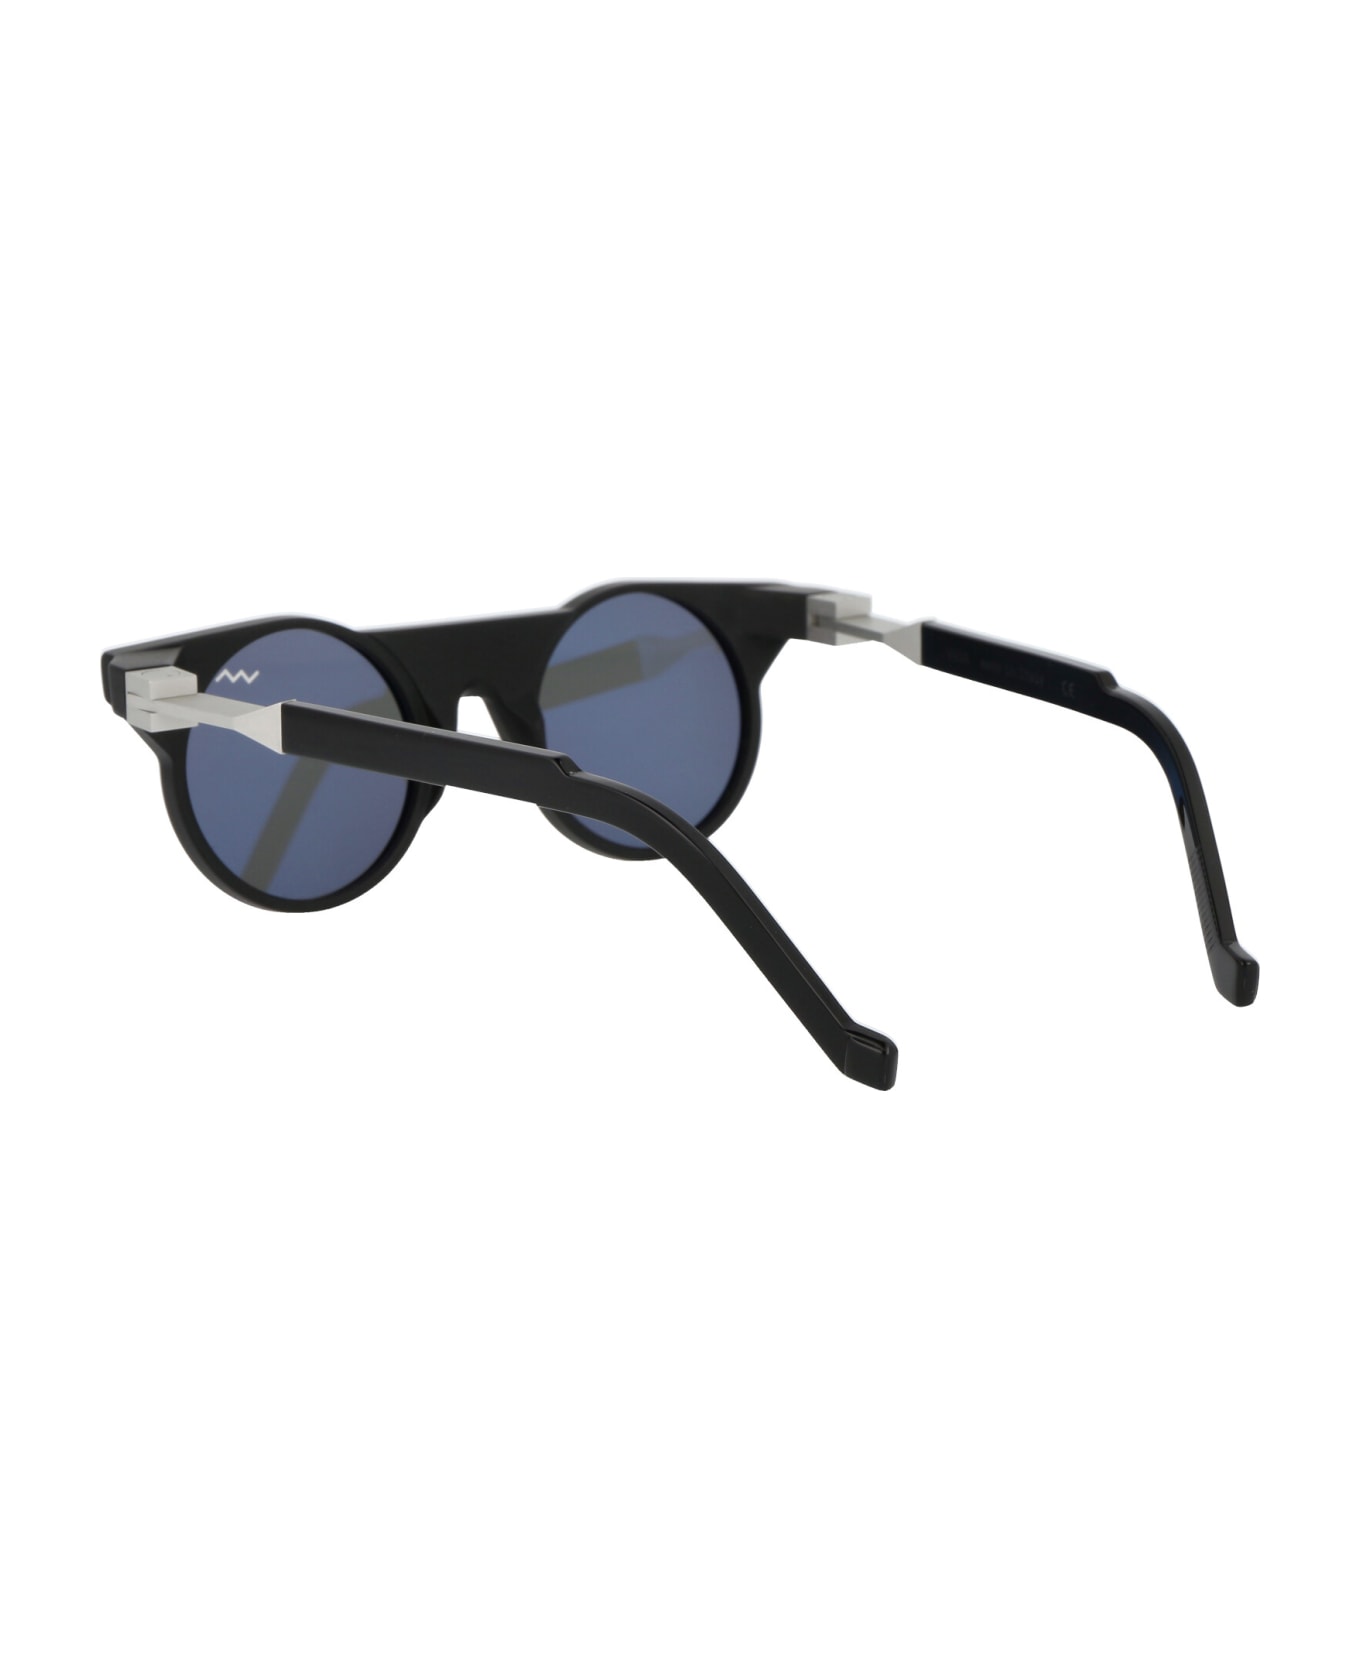 VAVA Bl0013 Sunglasses - BLACK SILVER LEX HINGES BLACK LENSES EURO